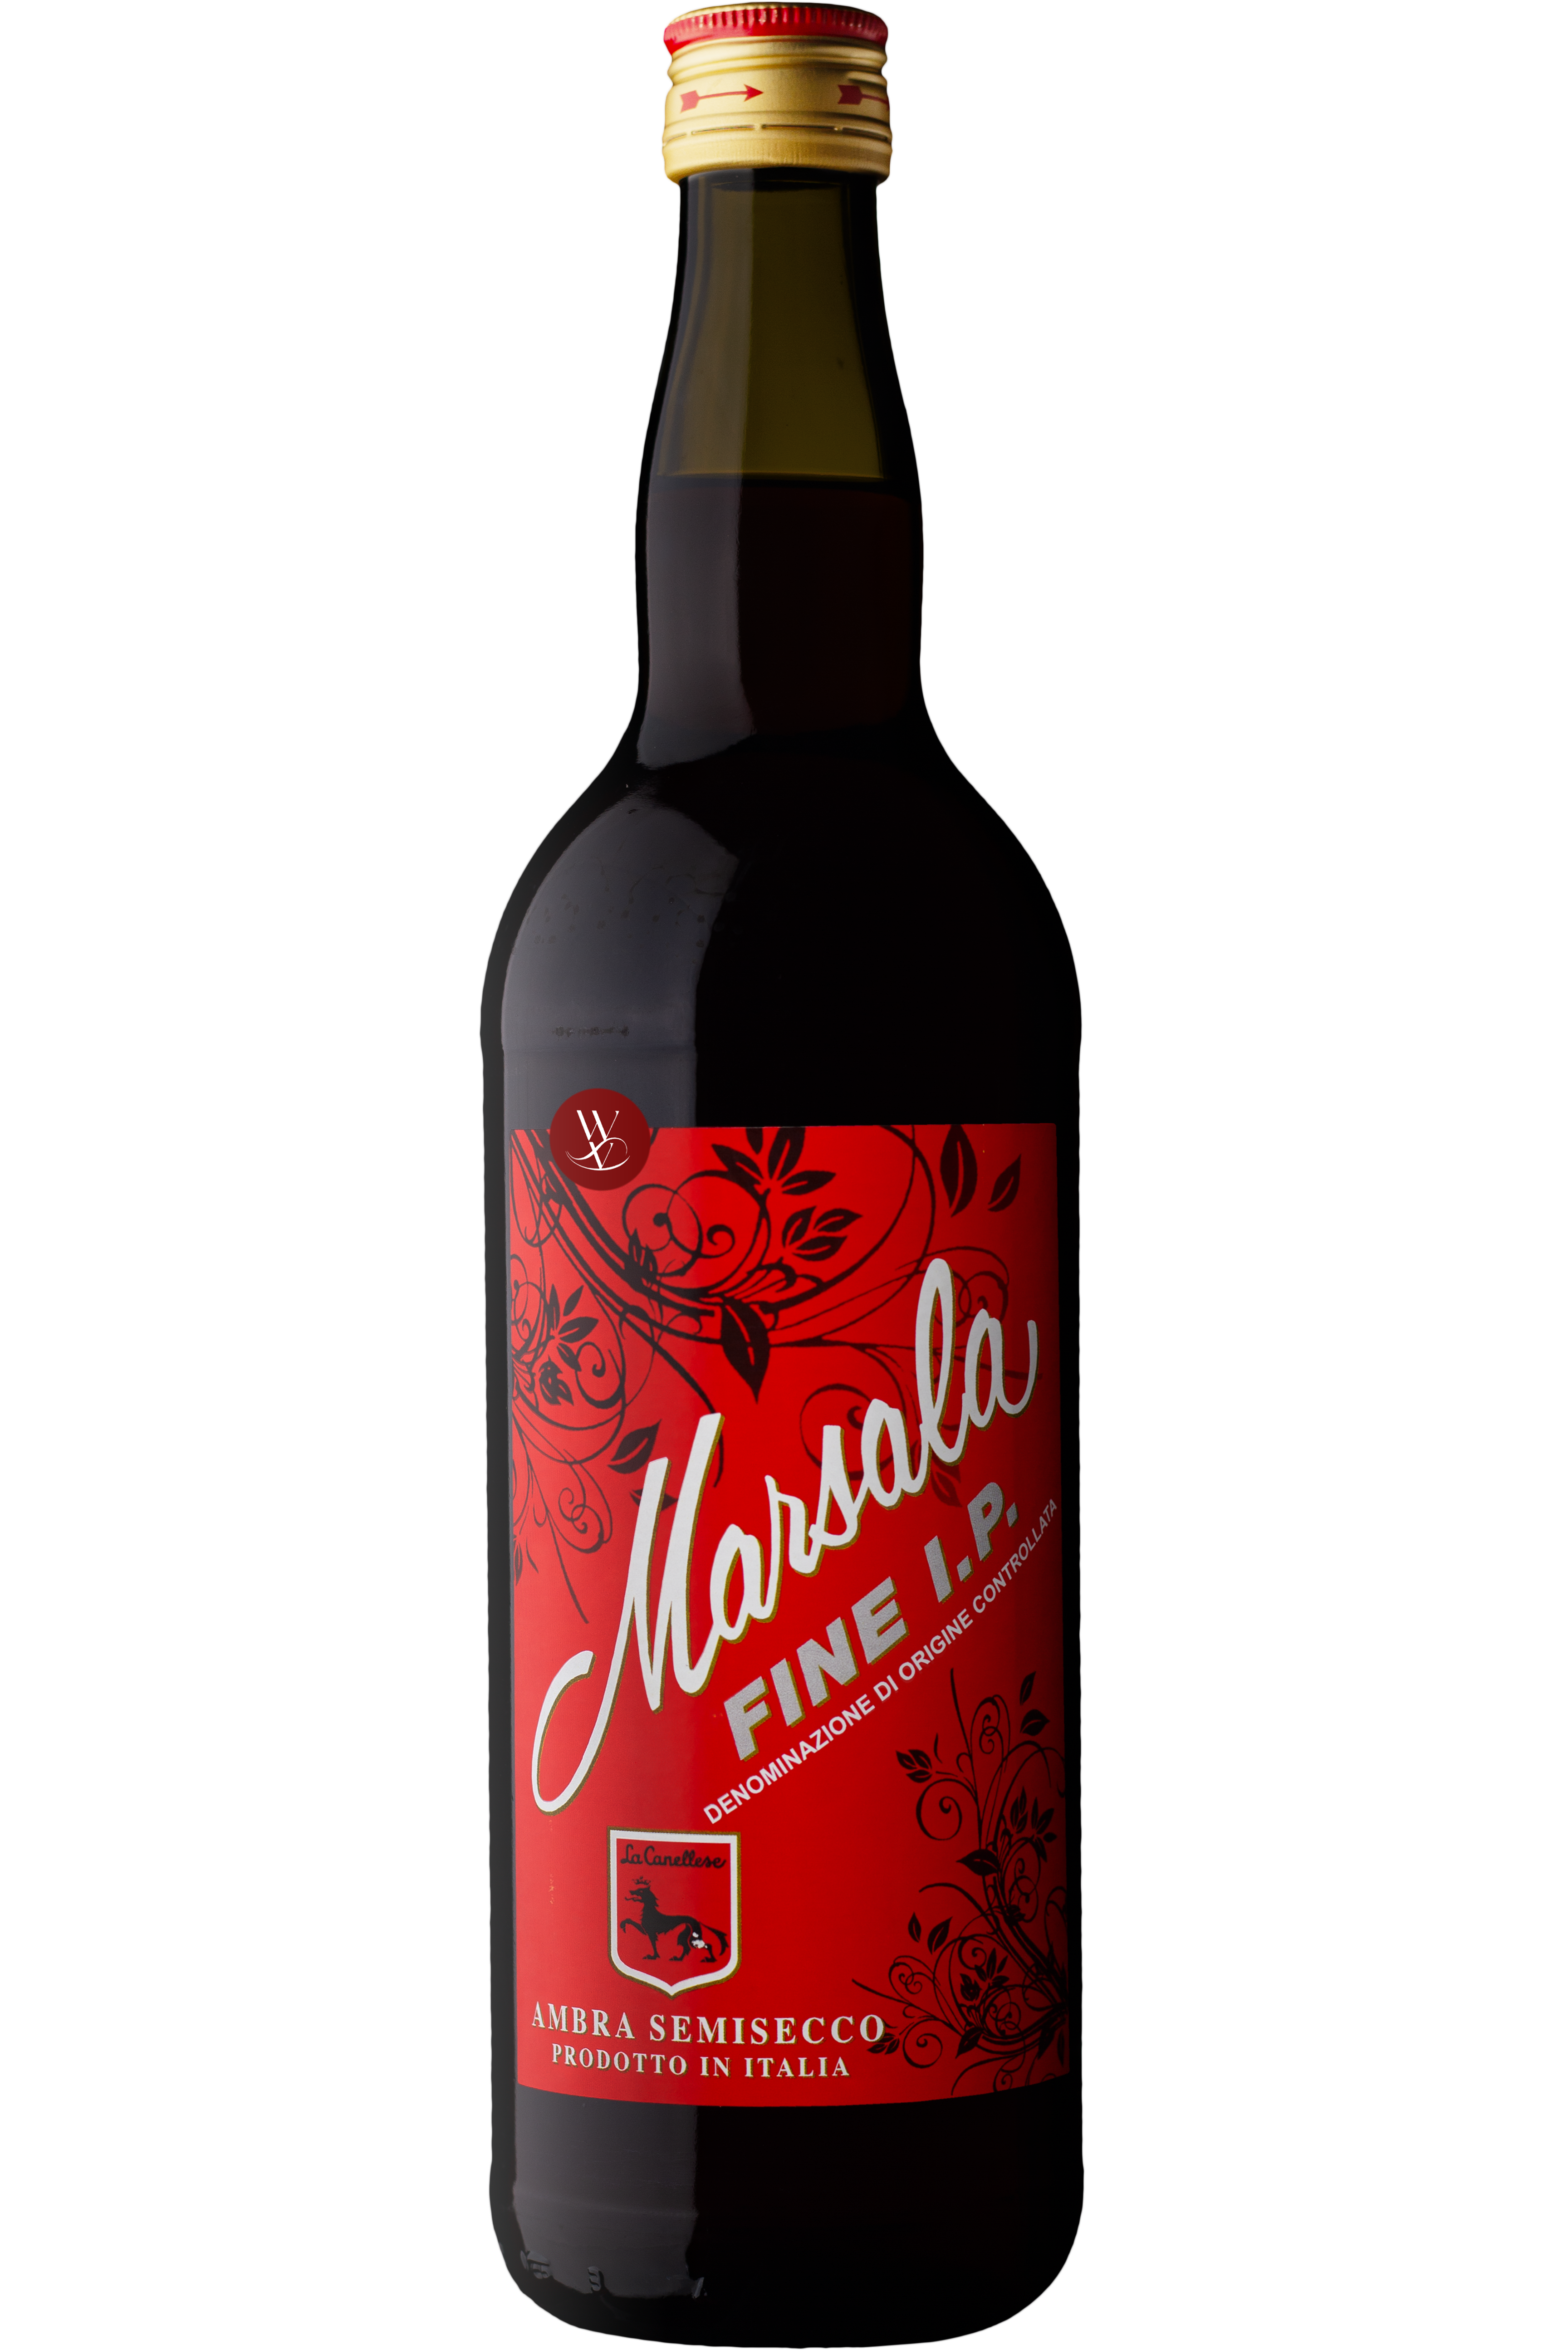 WineVins Marsala La Canellese